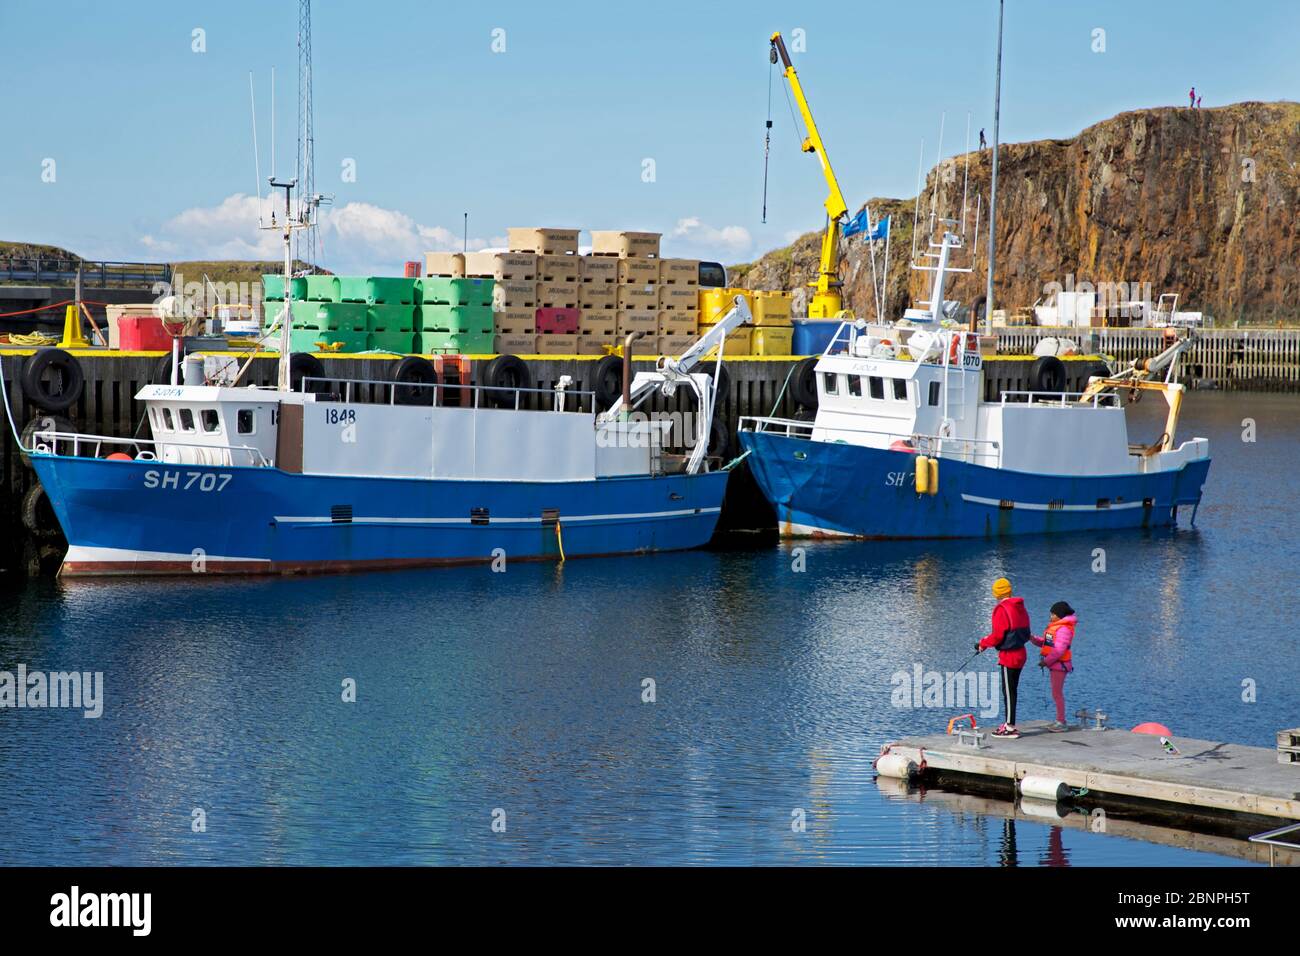 Navi da pesca nel porto di Stykisholmur. Foto Stock